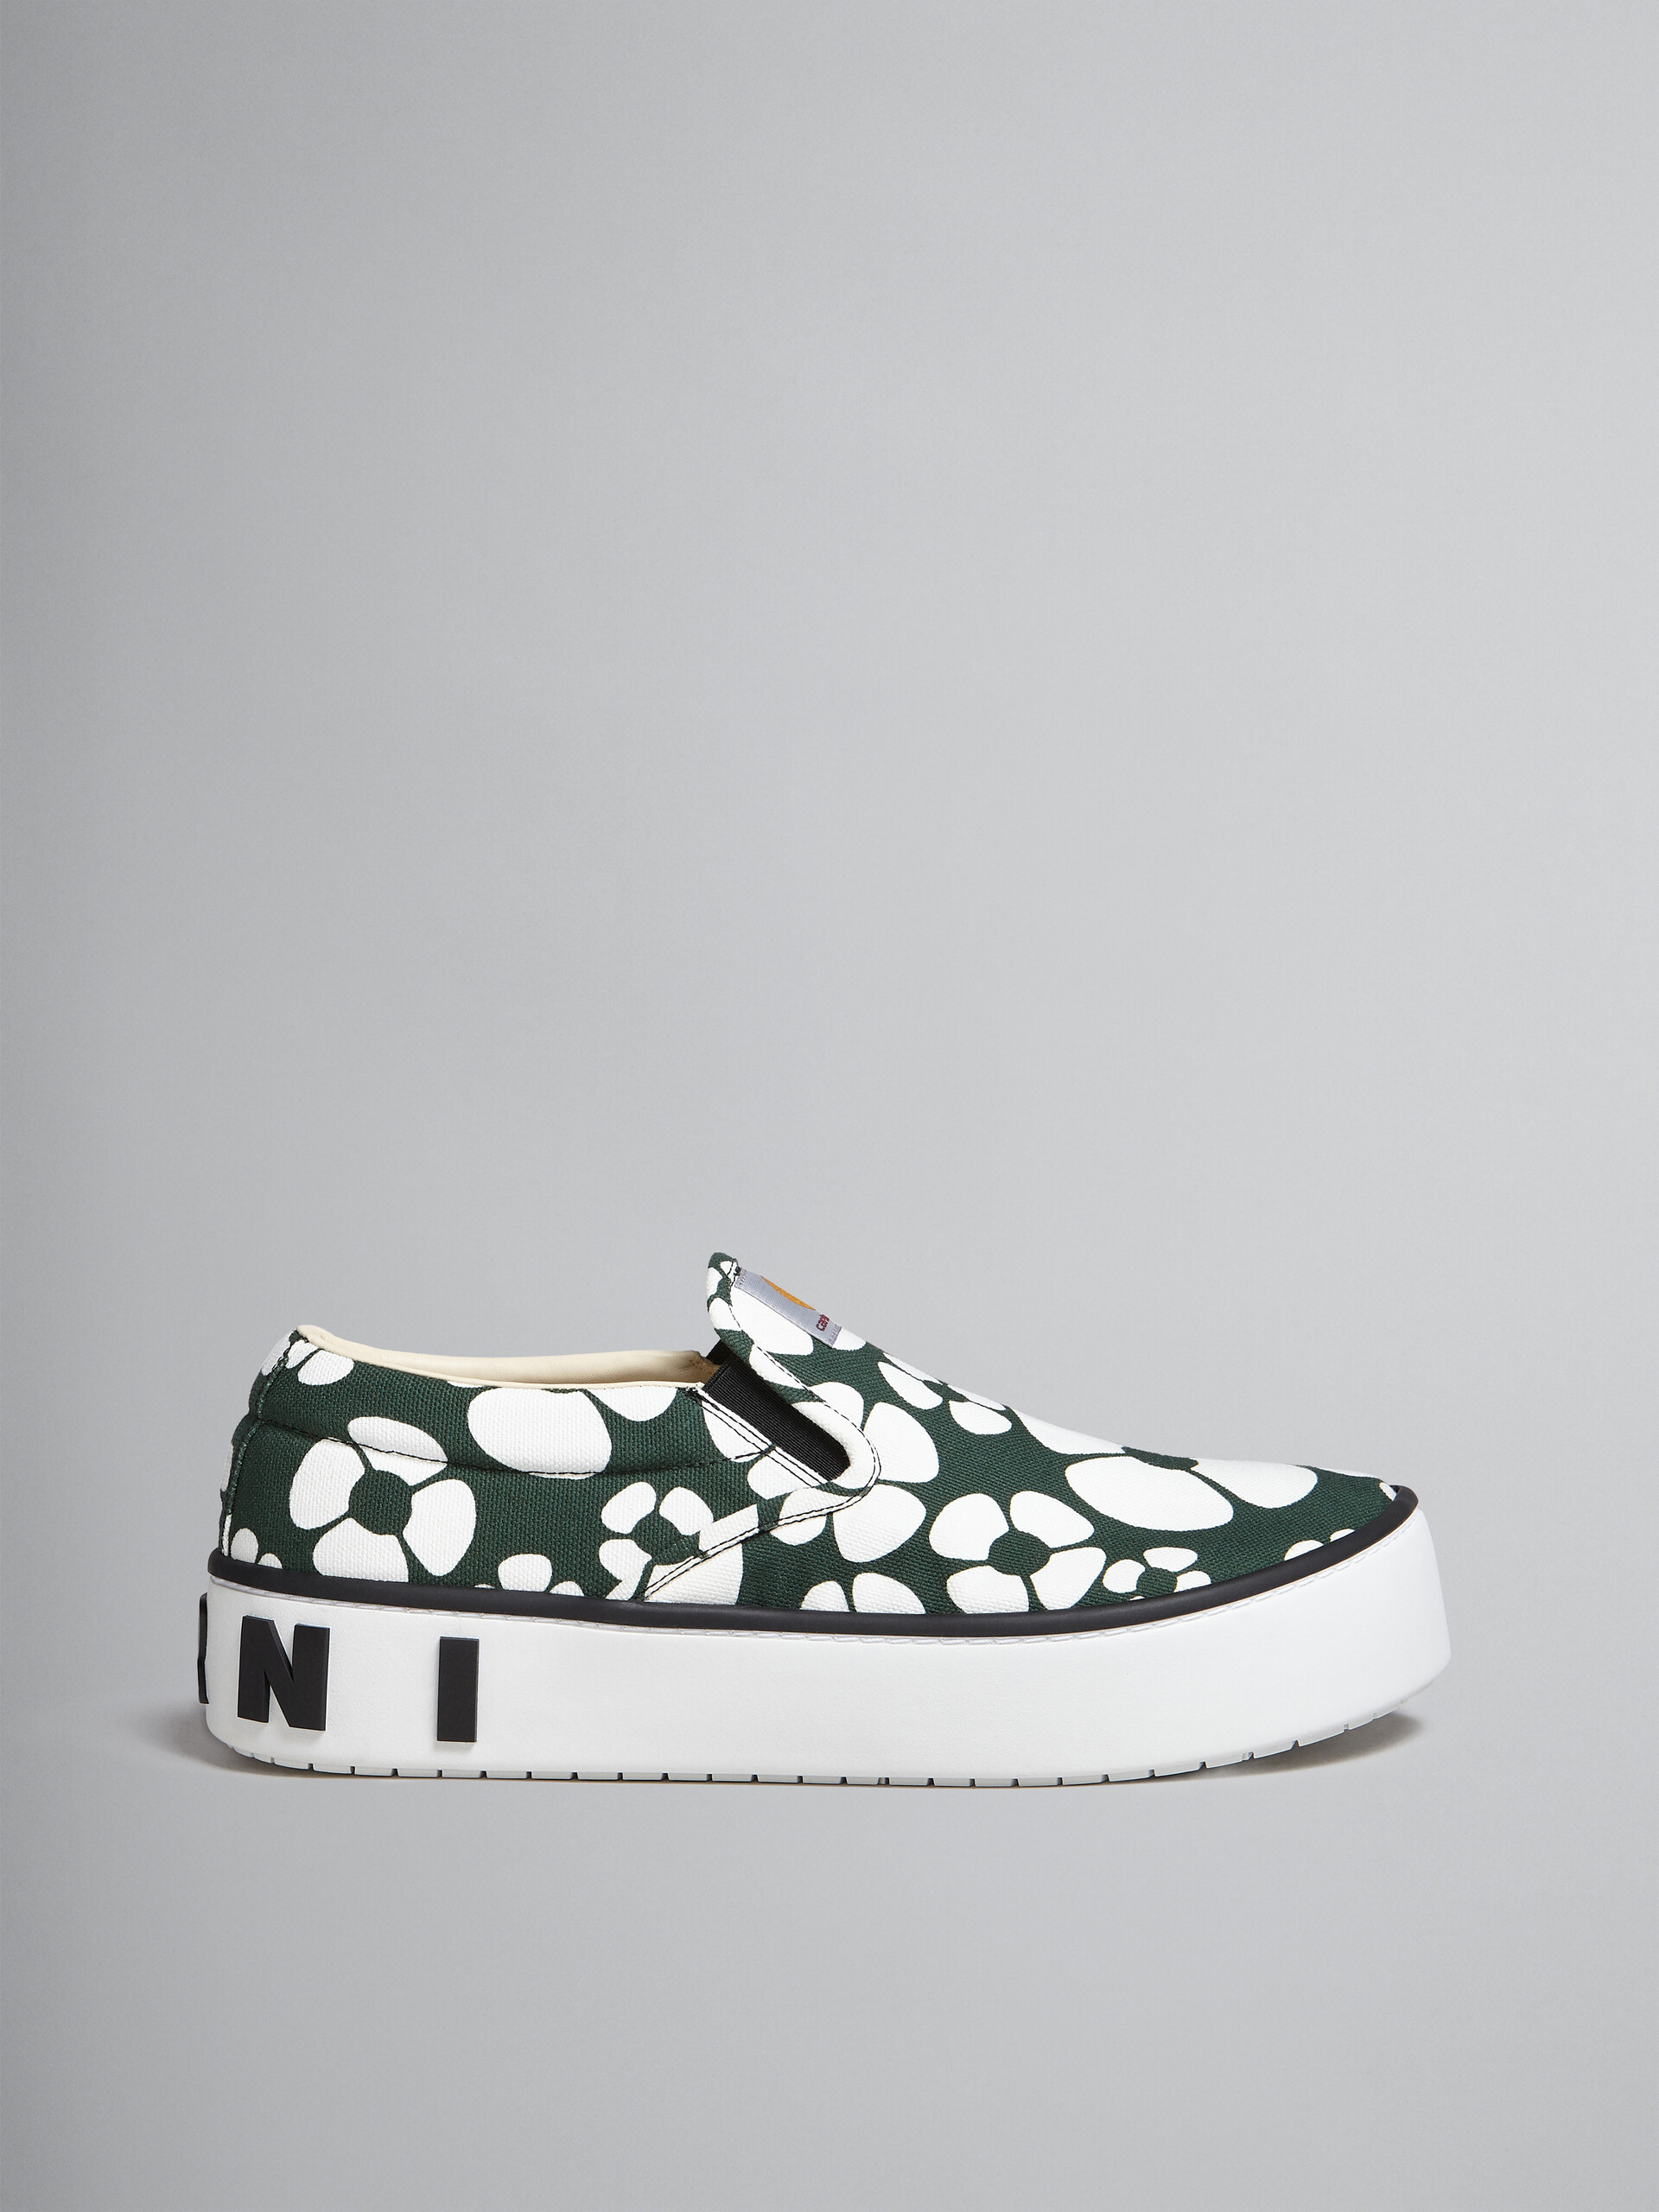 MARNI x CARHARTT WIP - green slip-on sneakers